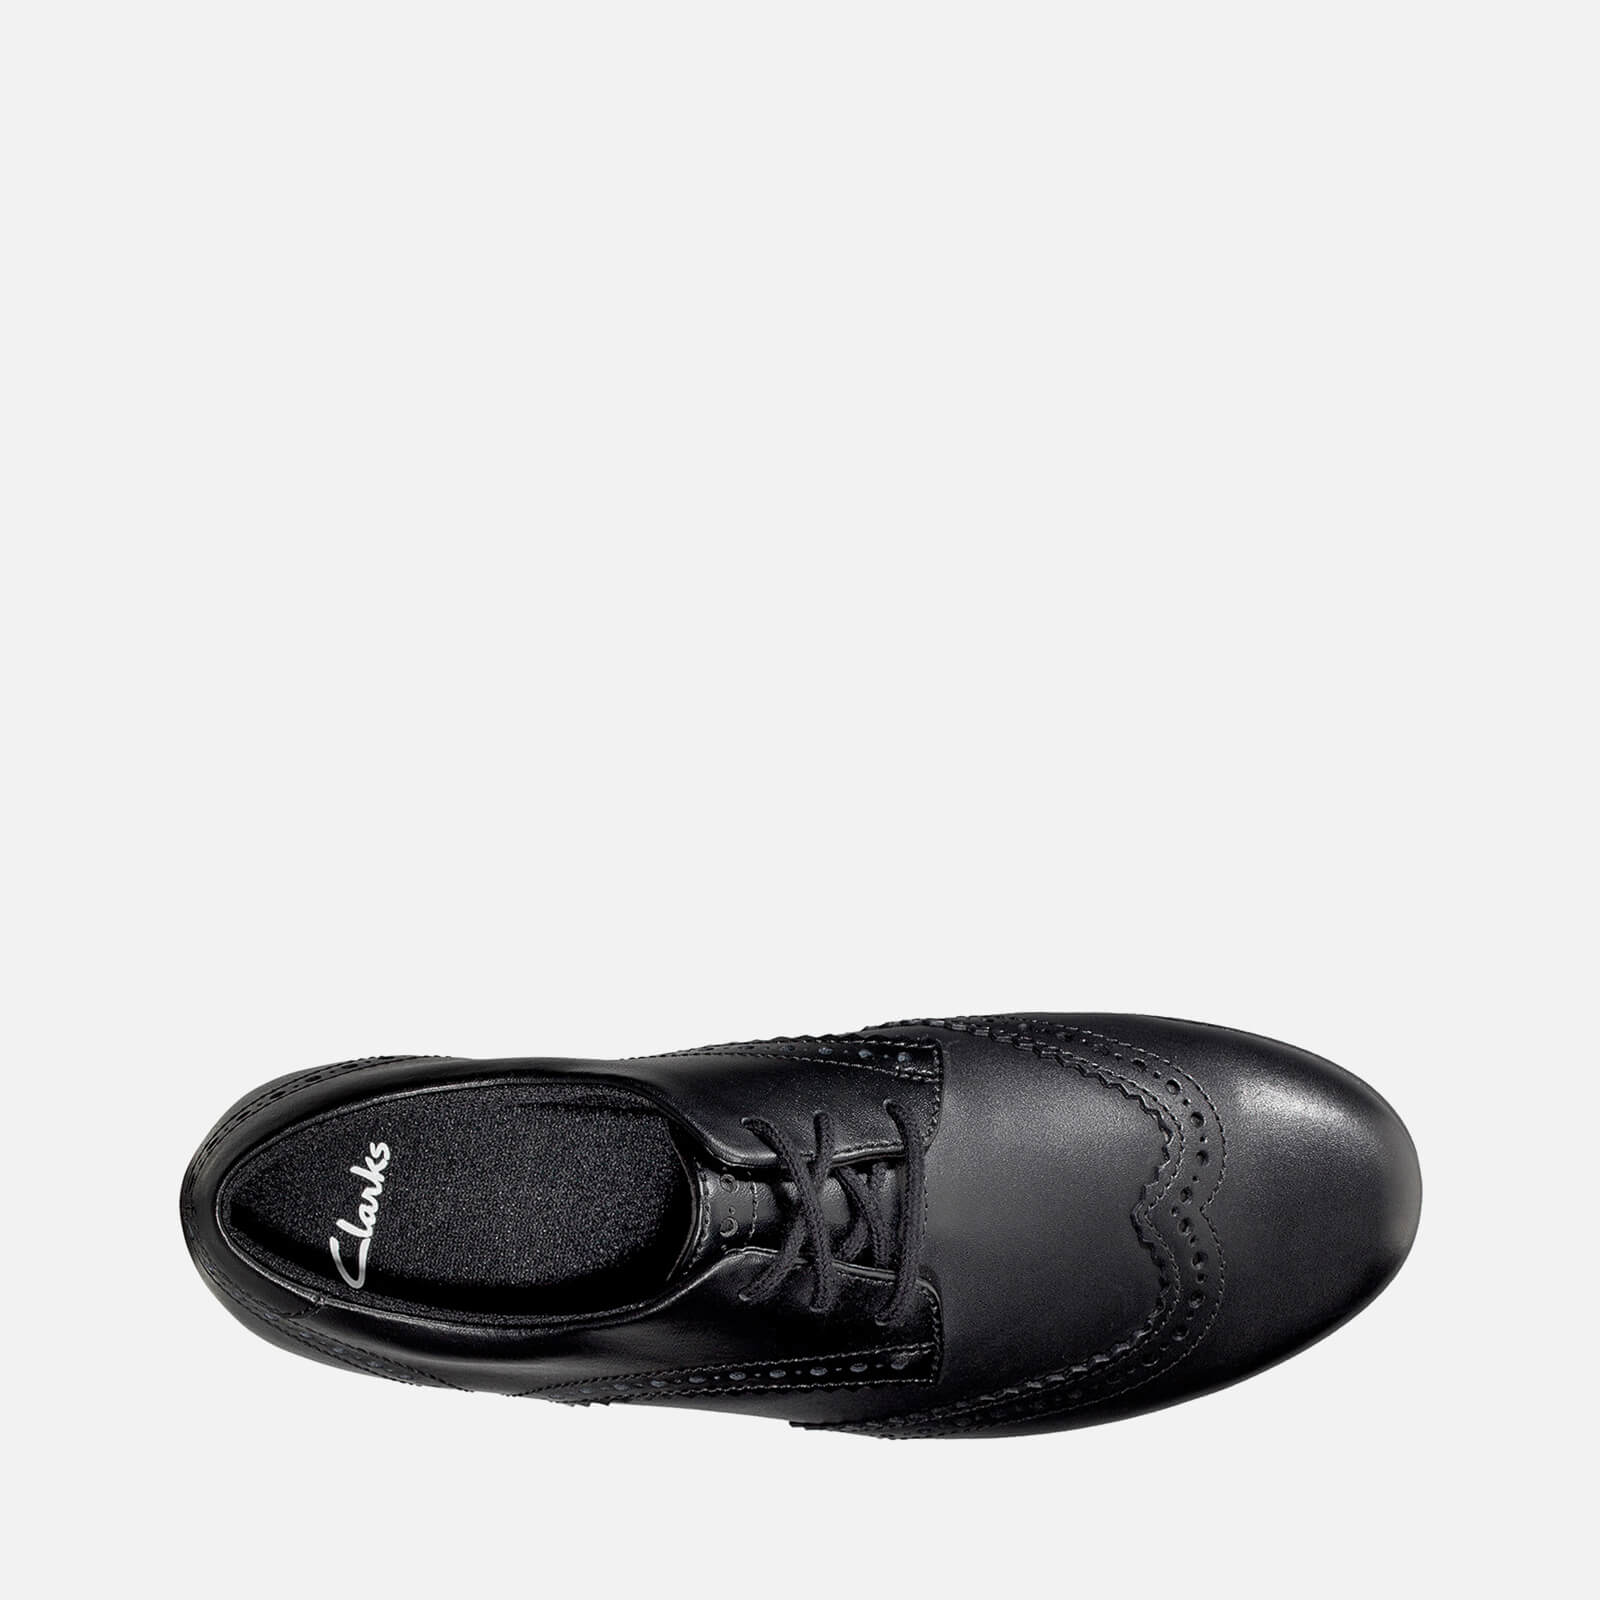 clarks kids' scala lace school shoes - black leather - uk 13 kids